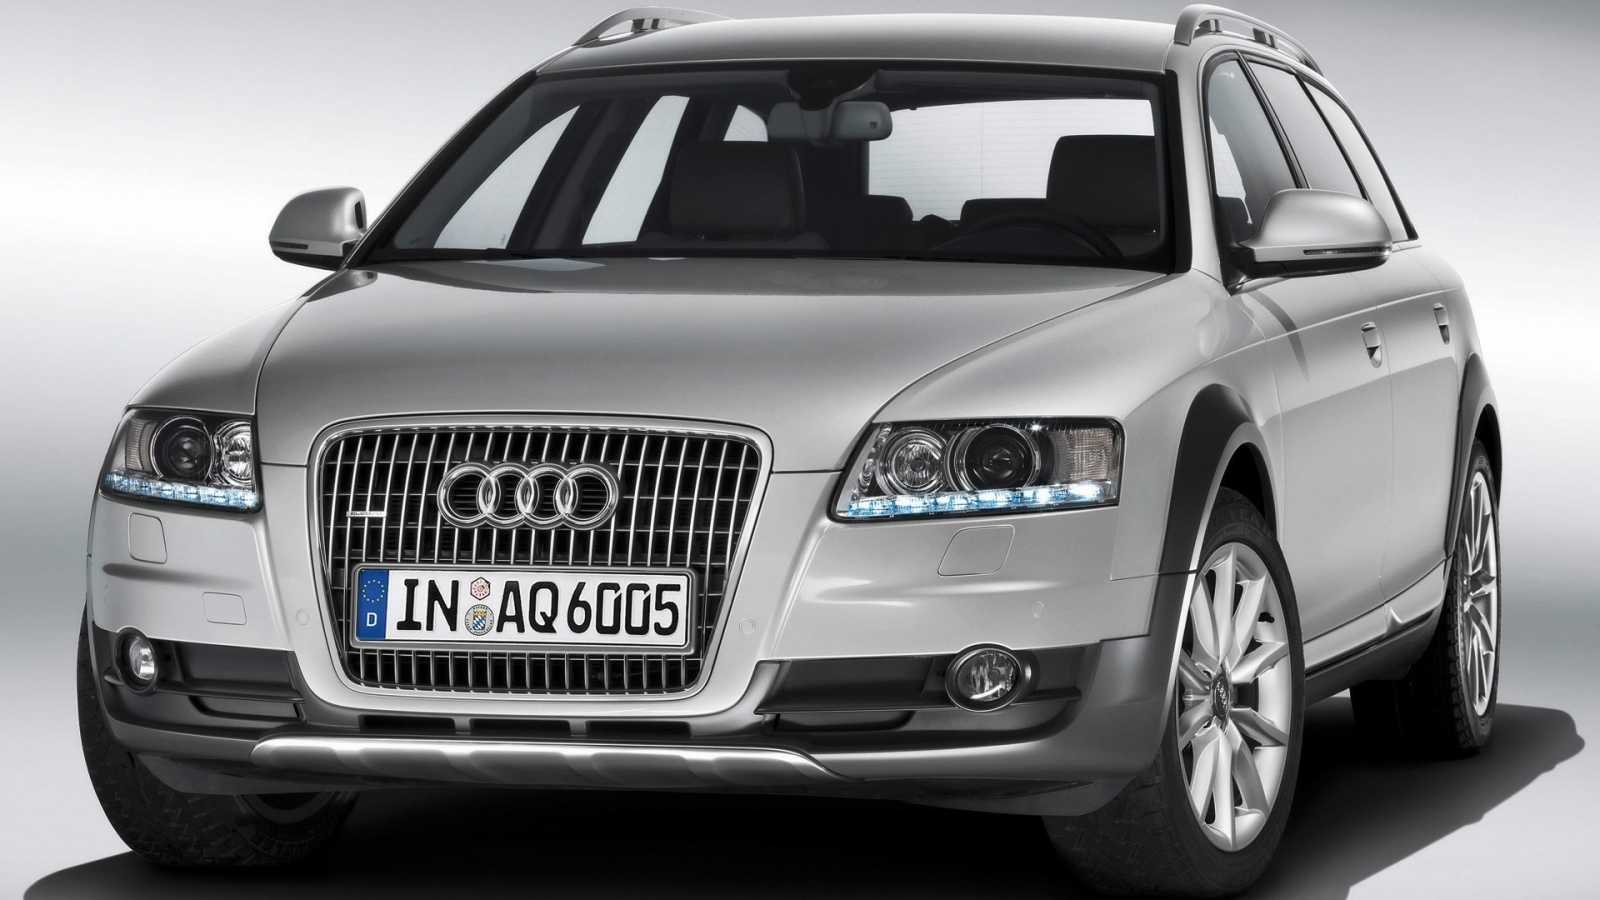 2009 Audi A6 allroad quattro - Front Angle for 1600 x 900 HDTV resolution